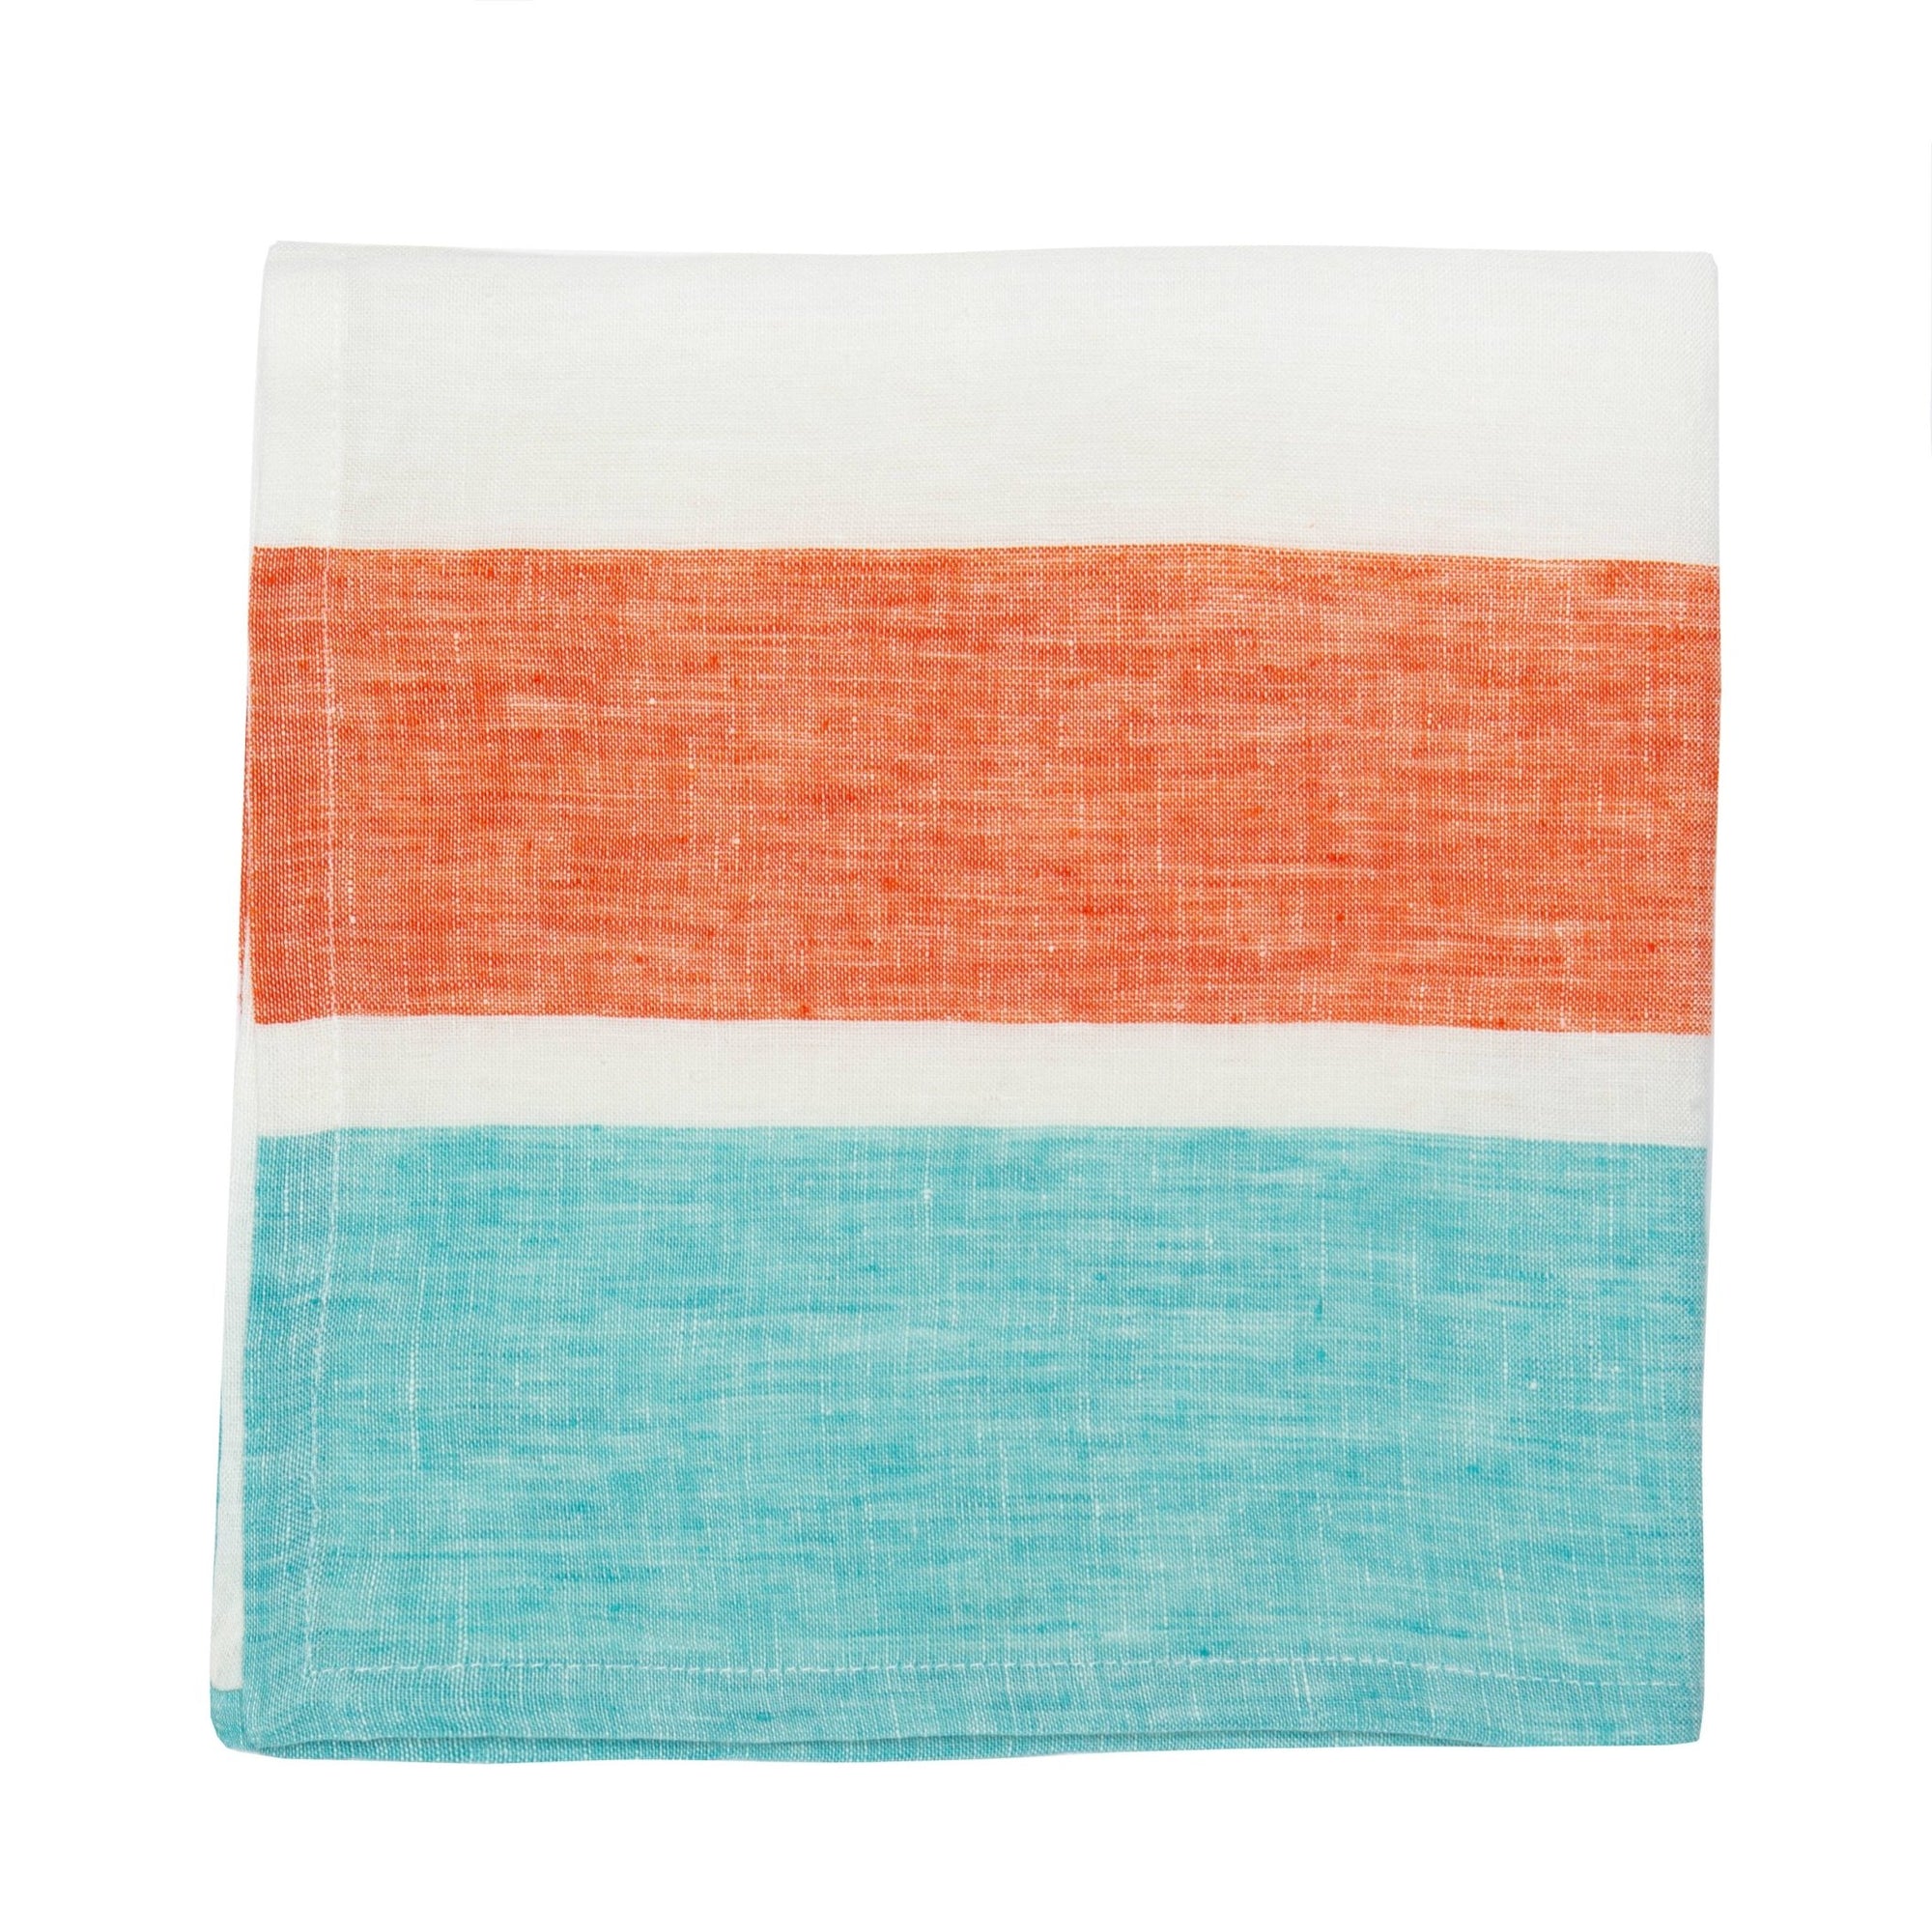 Bold Stripe Linen Turquoise Orange Napkins 20x20 - Set of 4: Turquoise/Orange - Abigail Fox Designs